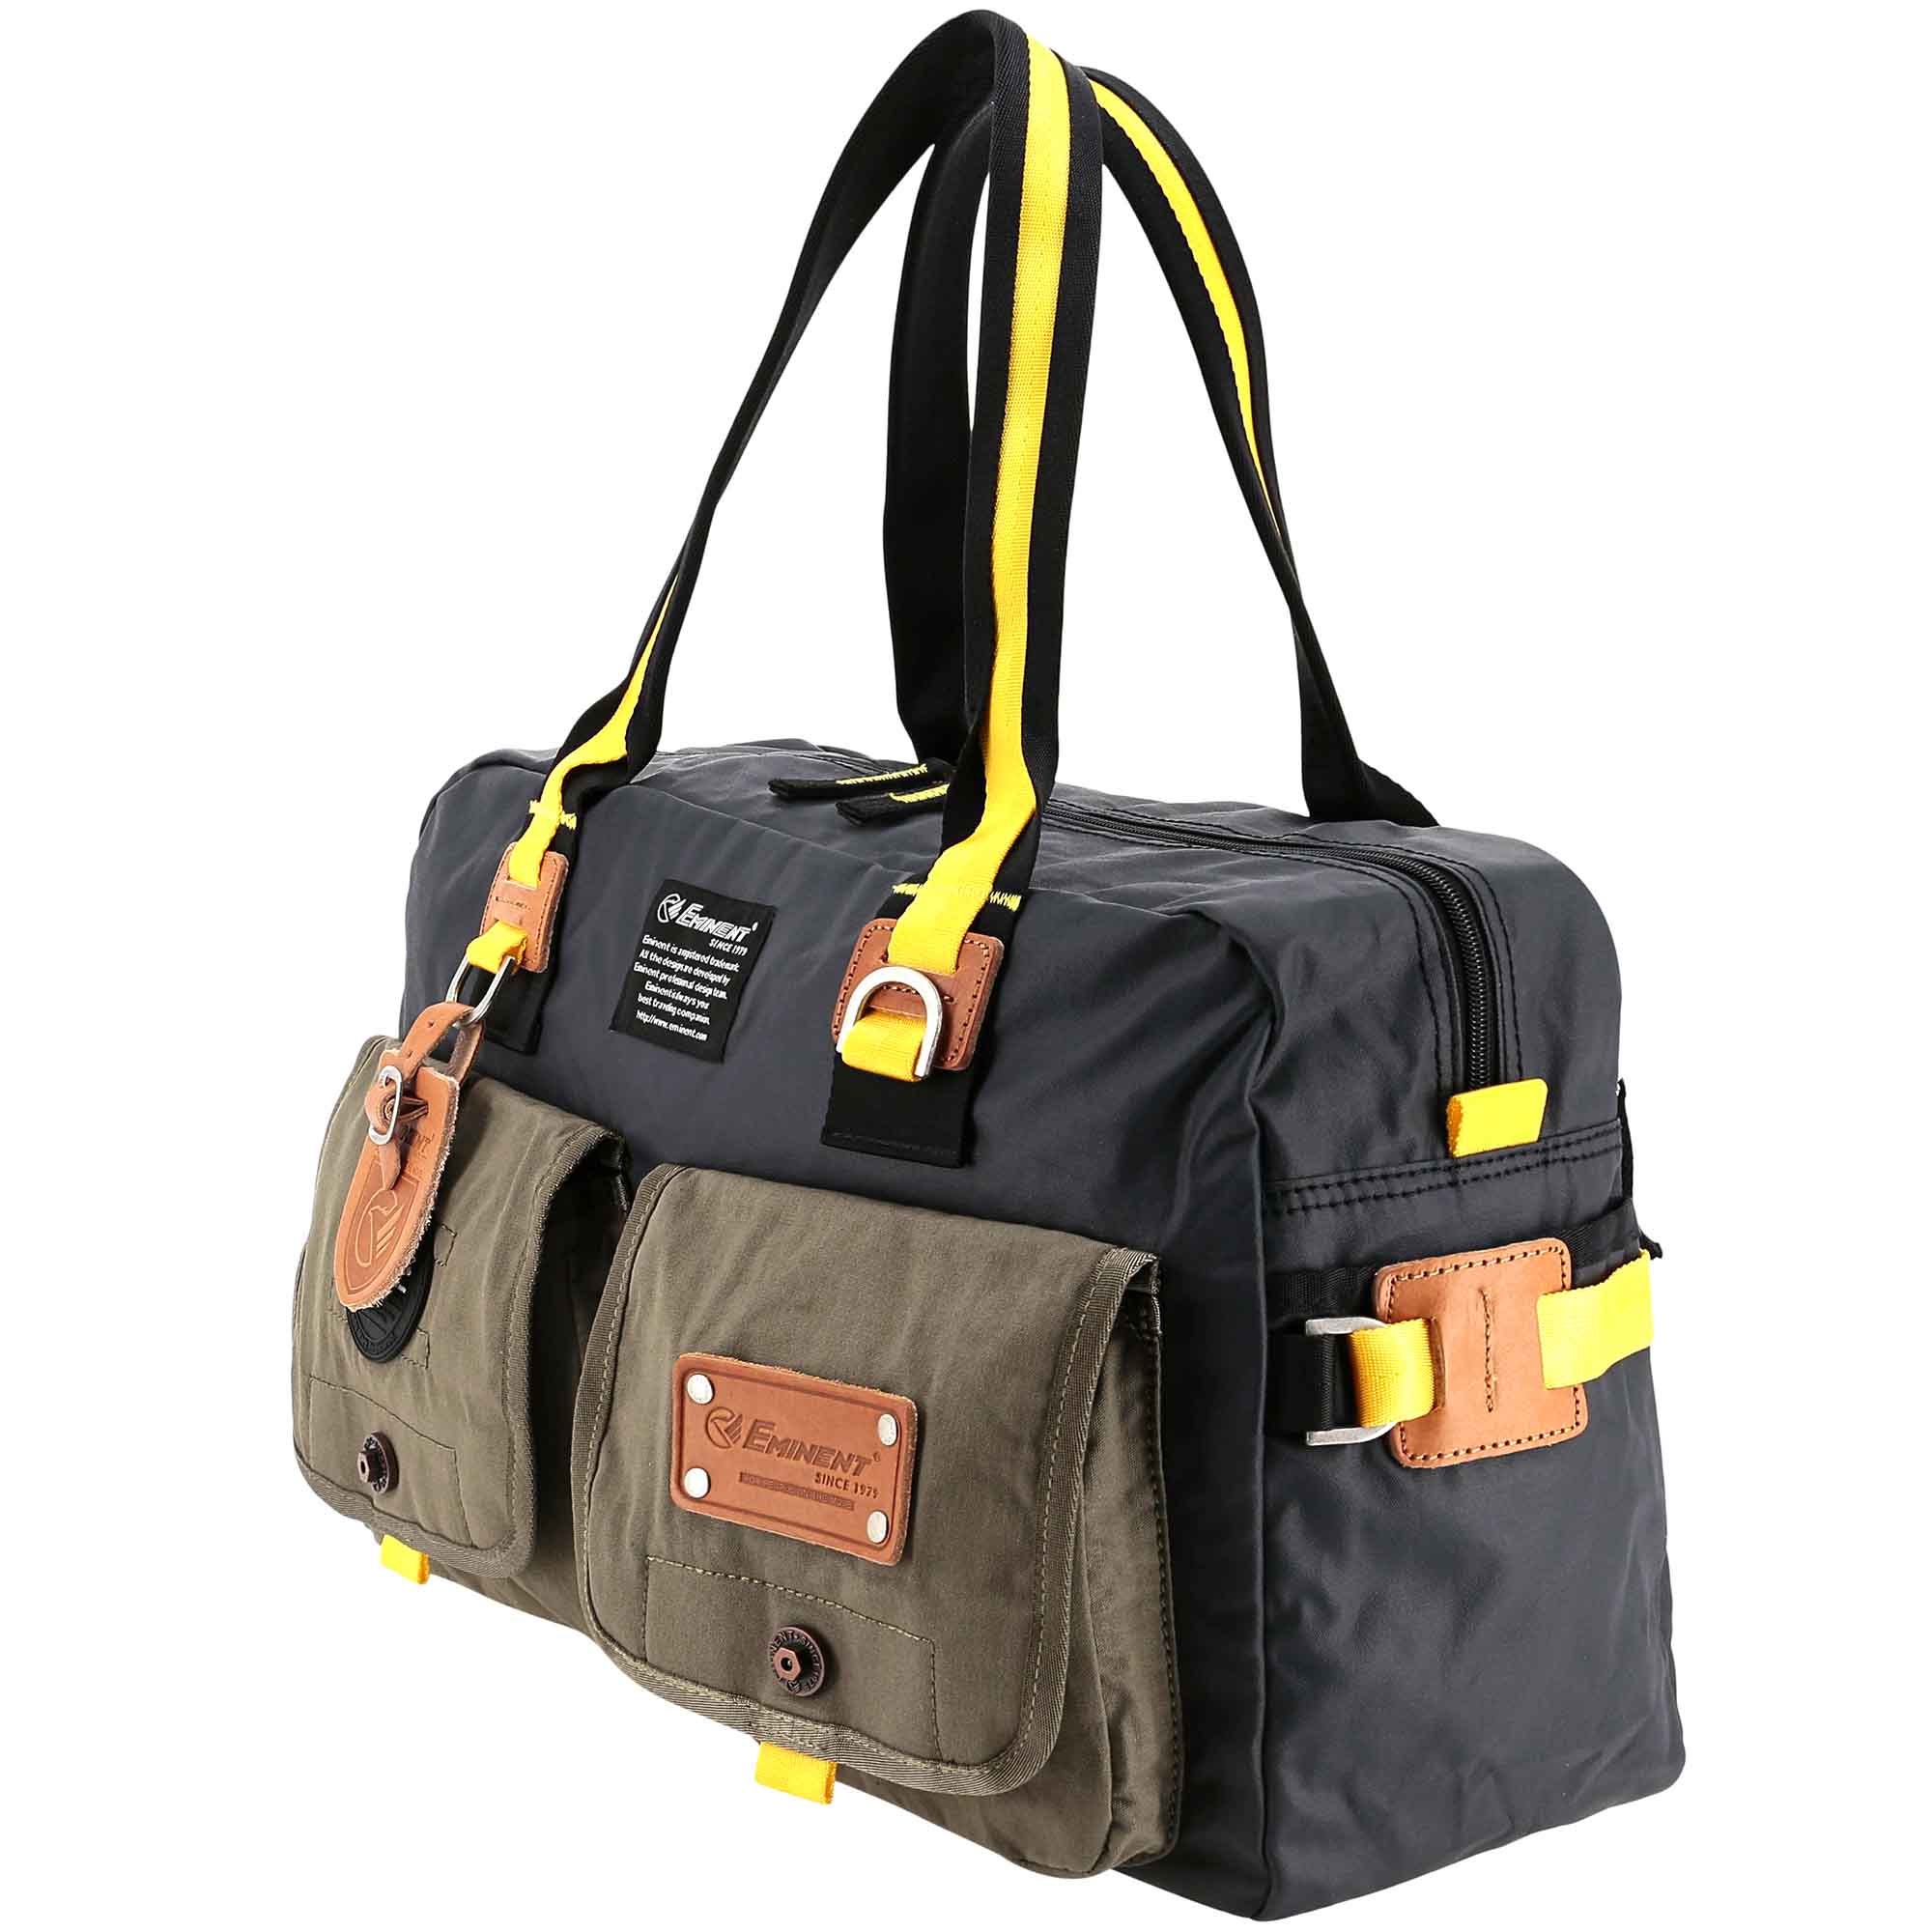 Duffel bag by Eminent (E66336-17) - buyluggageonline